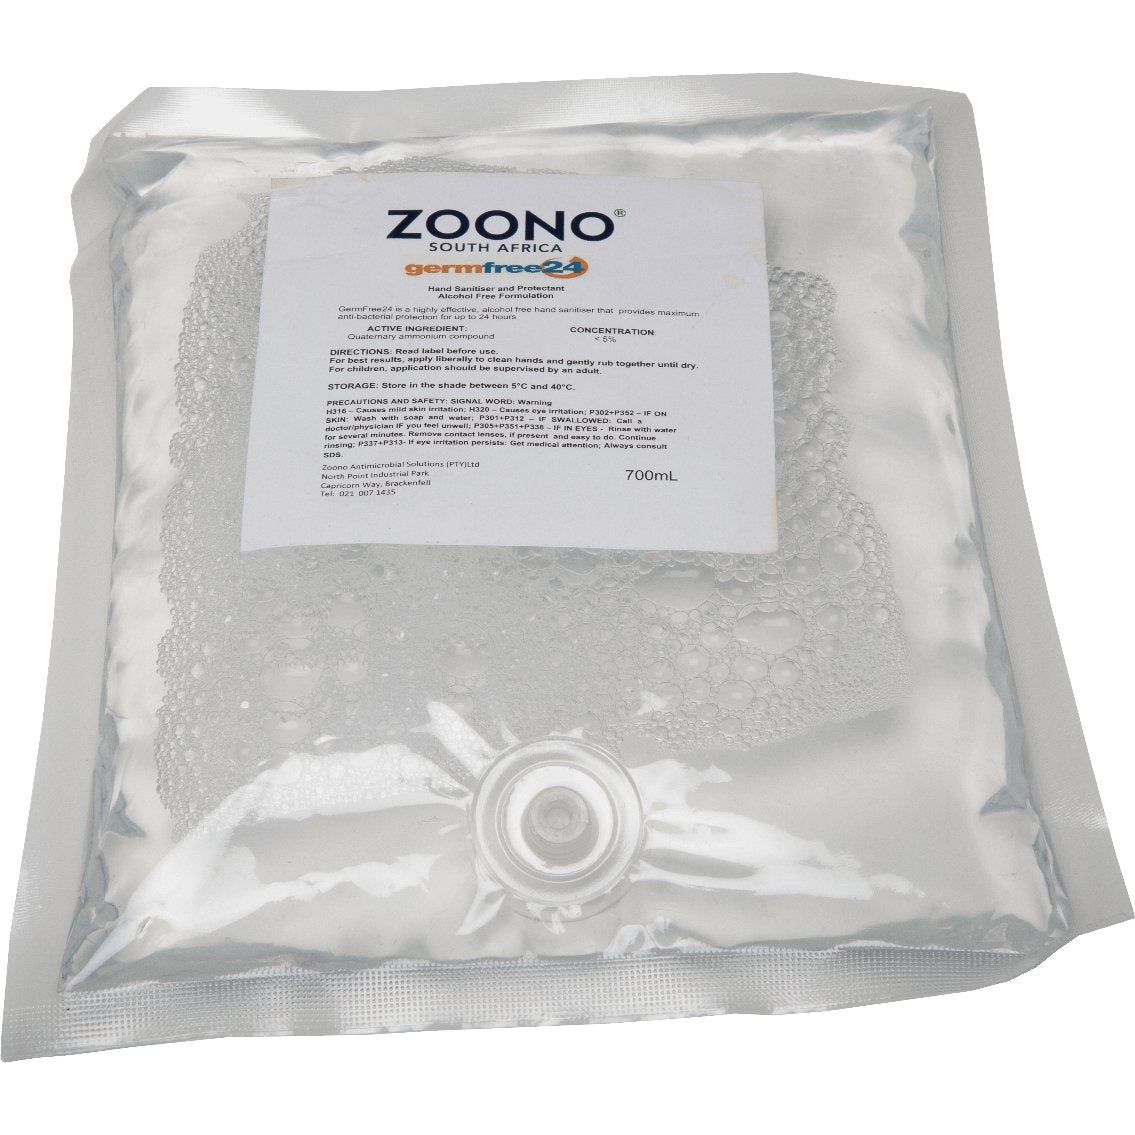 Zoono Hand Sanitiser 700ml Dispenser Refill Pouch - New World